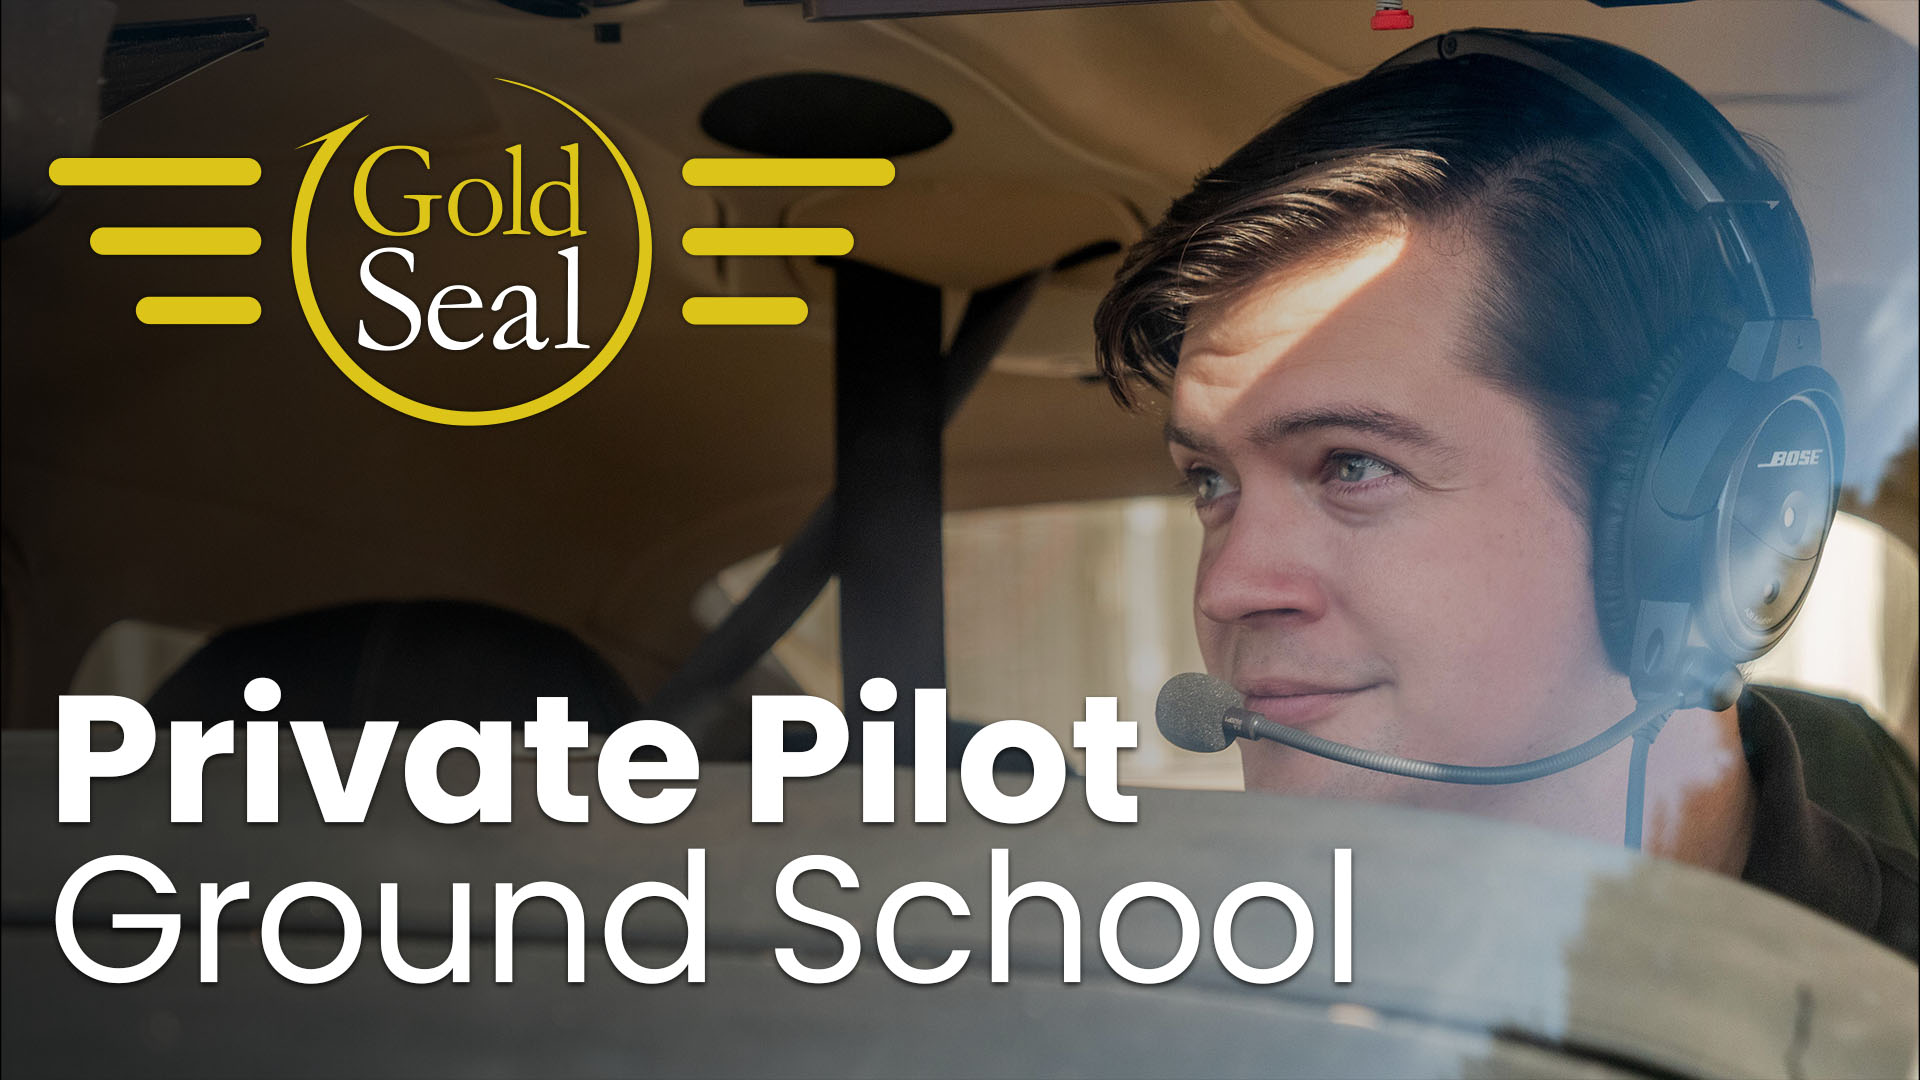 Gold Seal Private Pilot Ground School